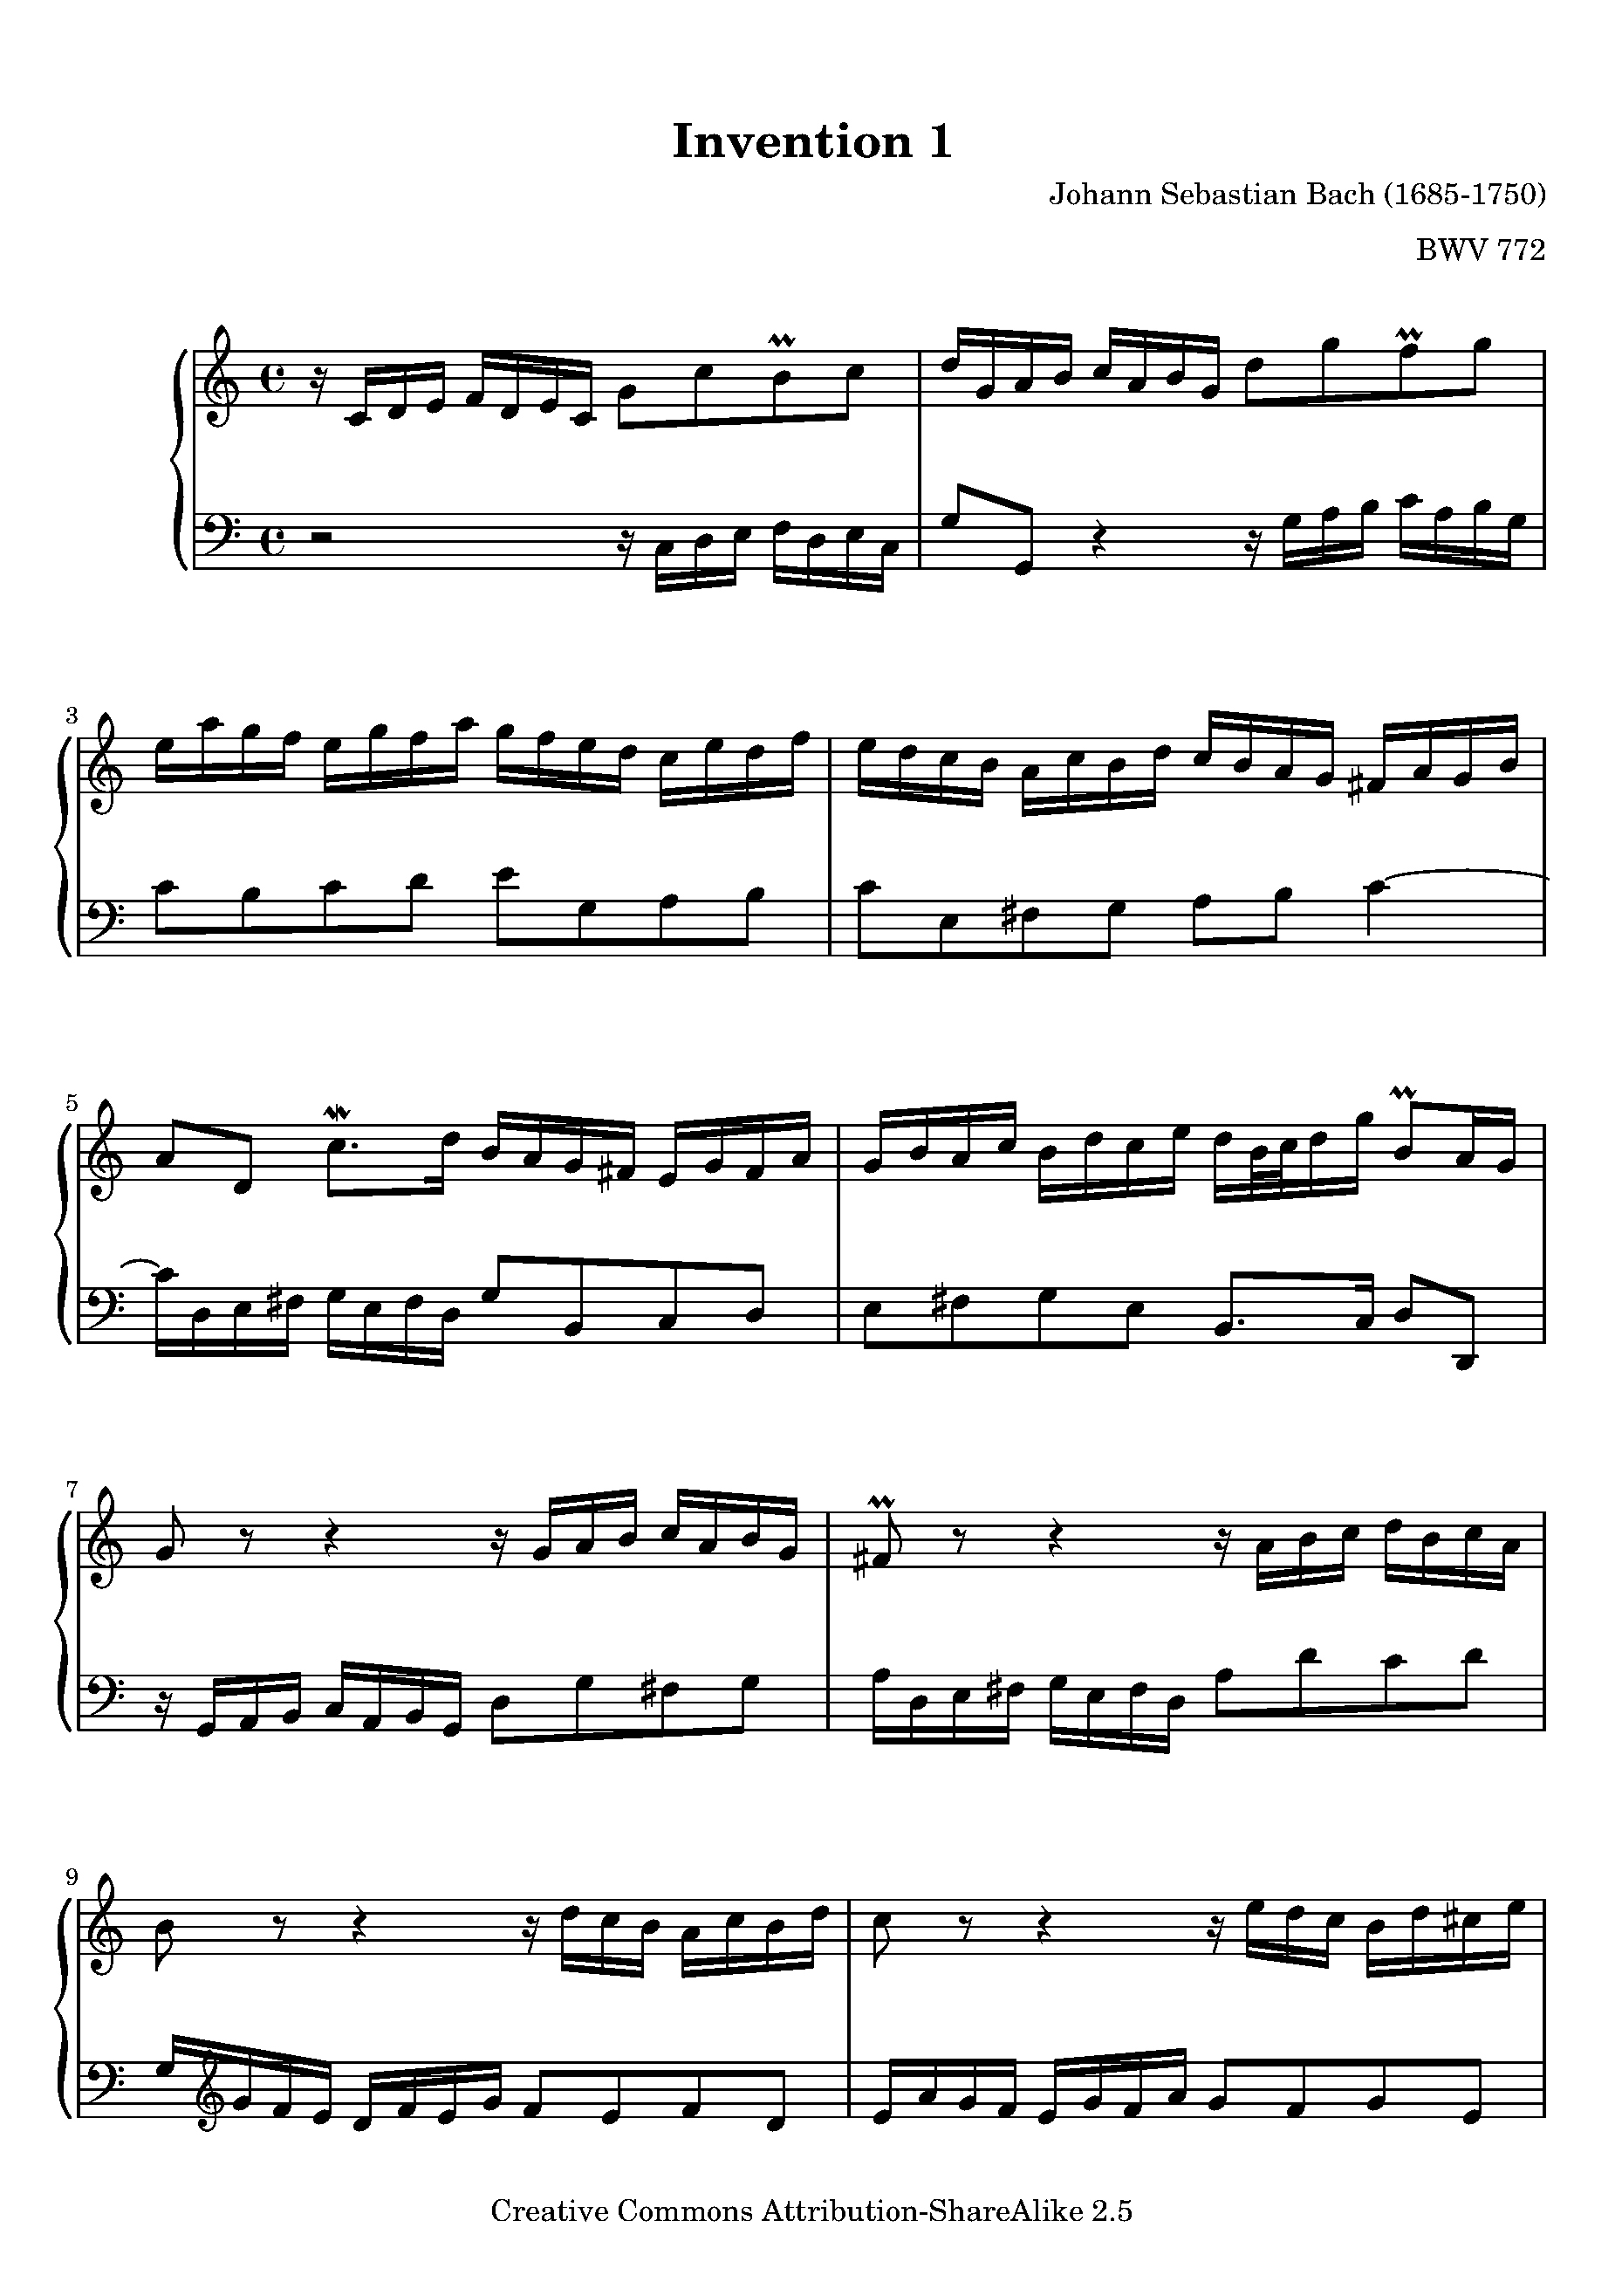 Sherlock Holmes Ídolo Museo Guggenheim Bach, Johann Sebastian - Invention 1 BWV 772 Midi file for Piano (midi) -  8notes.com